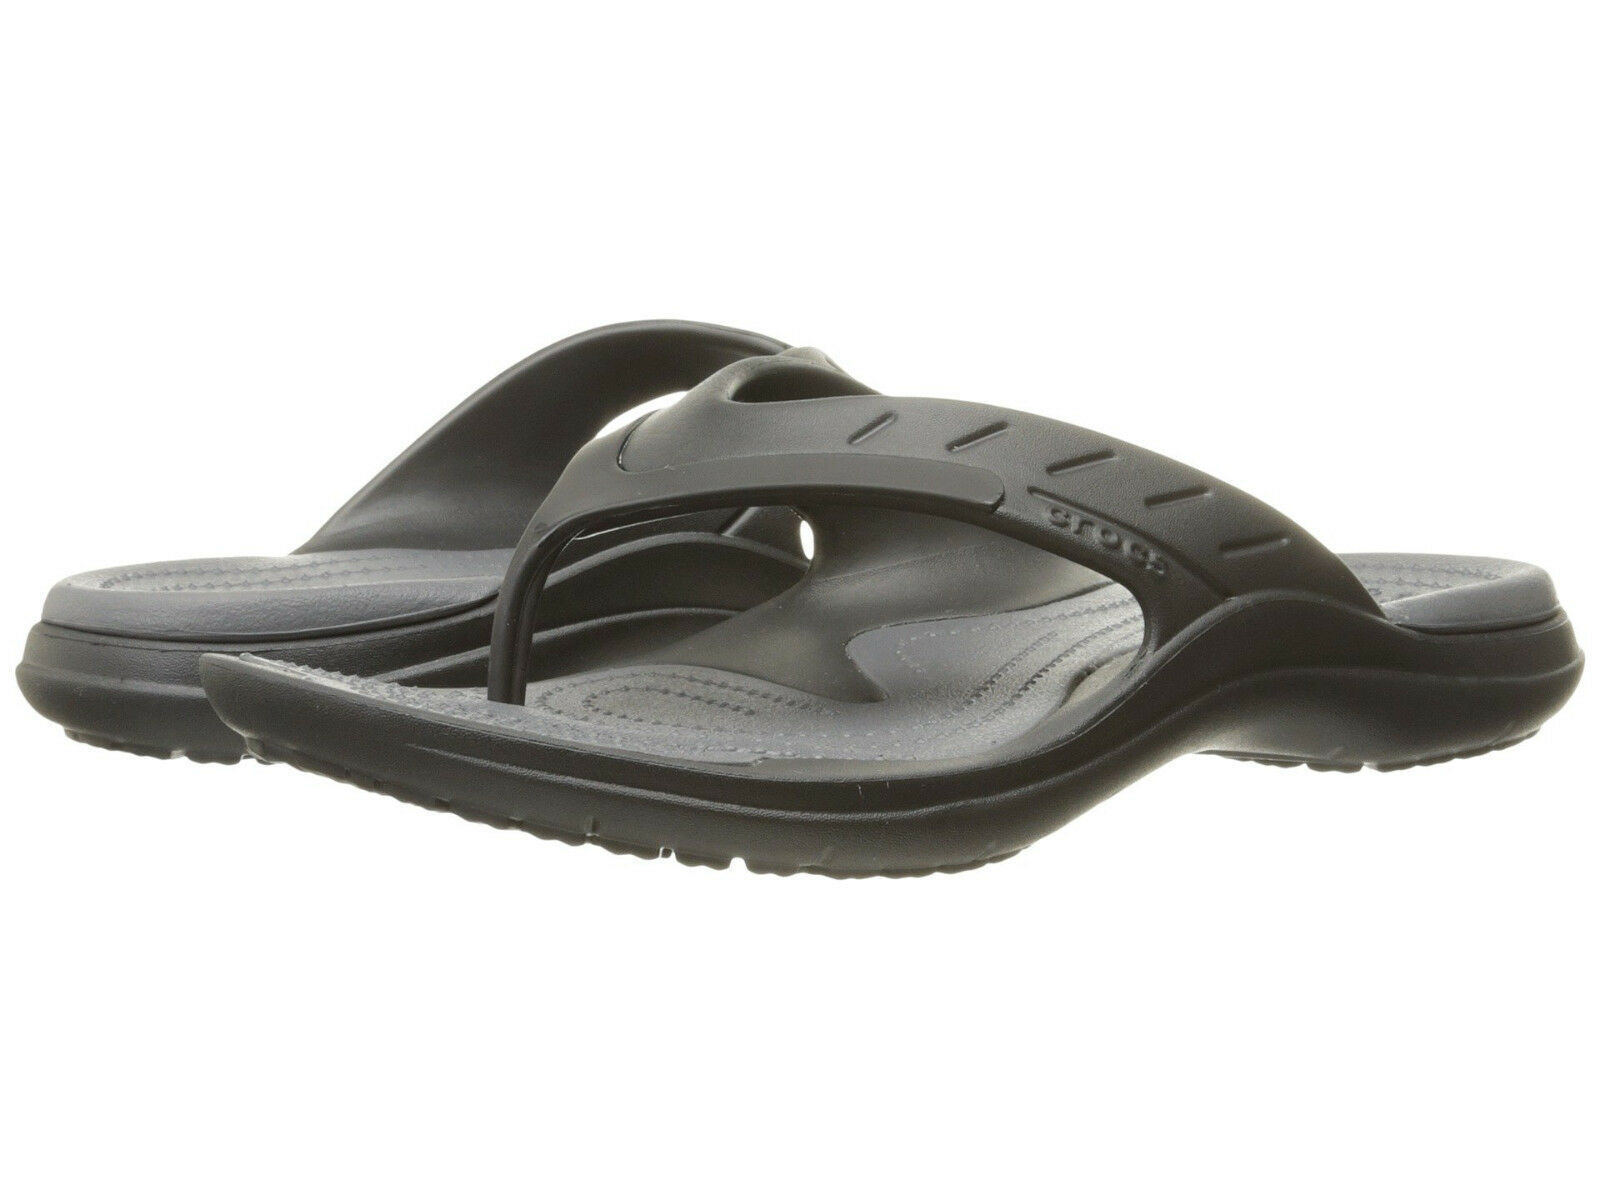 Crocs Men's Modi Sport Flip Flops Thongs Summer - Black/Graphite